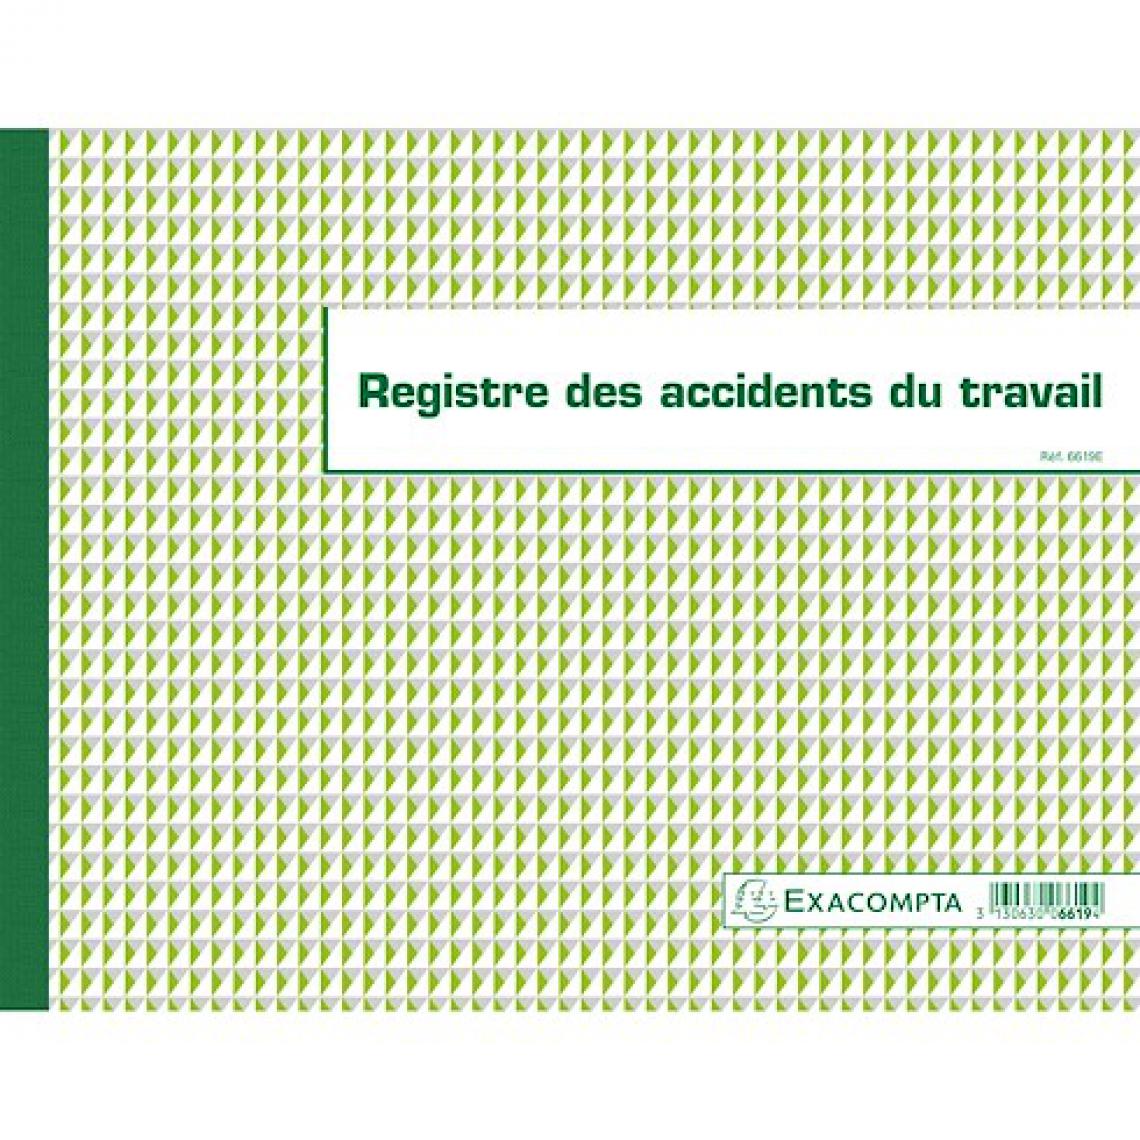 Exacompta - Registre piqûre accidents du travail Exacompta 6619E - Accessoires Bureau